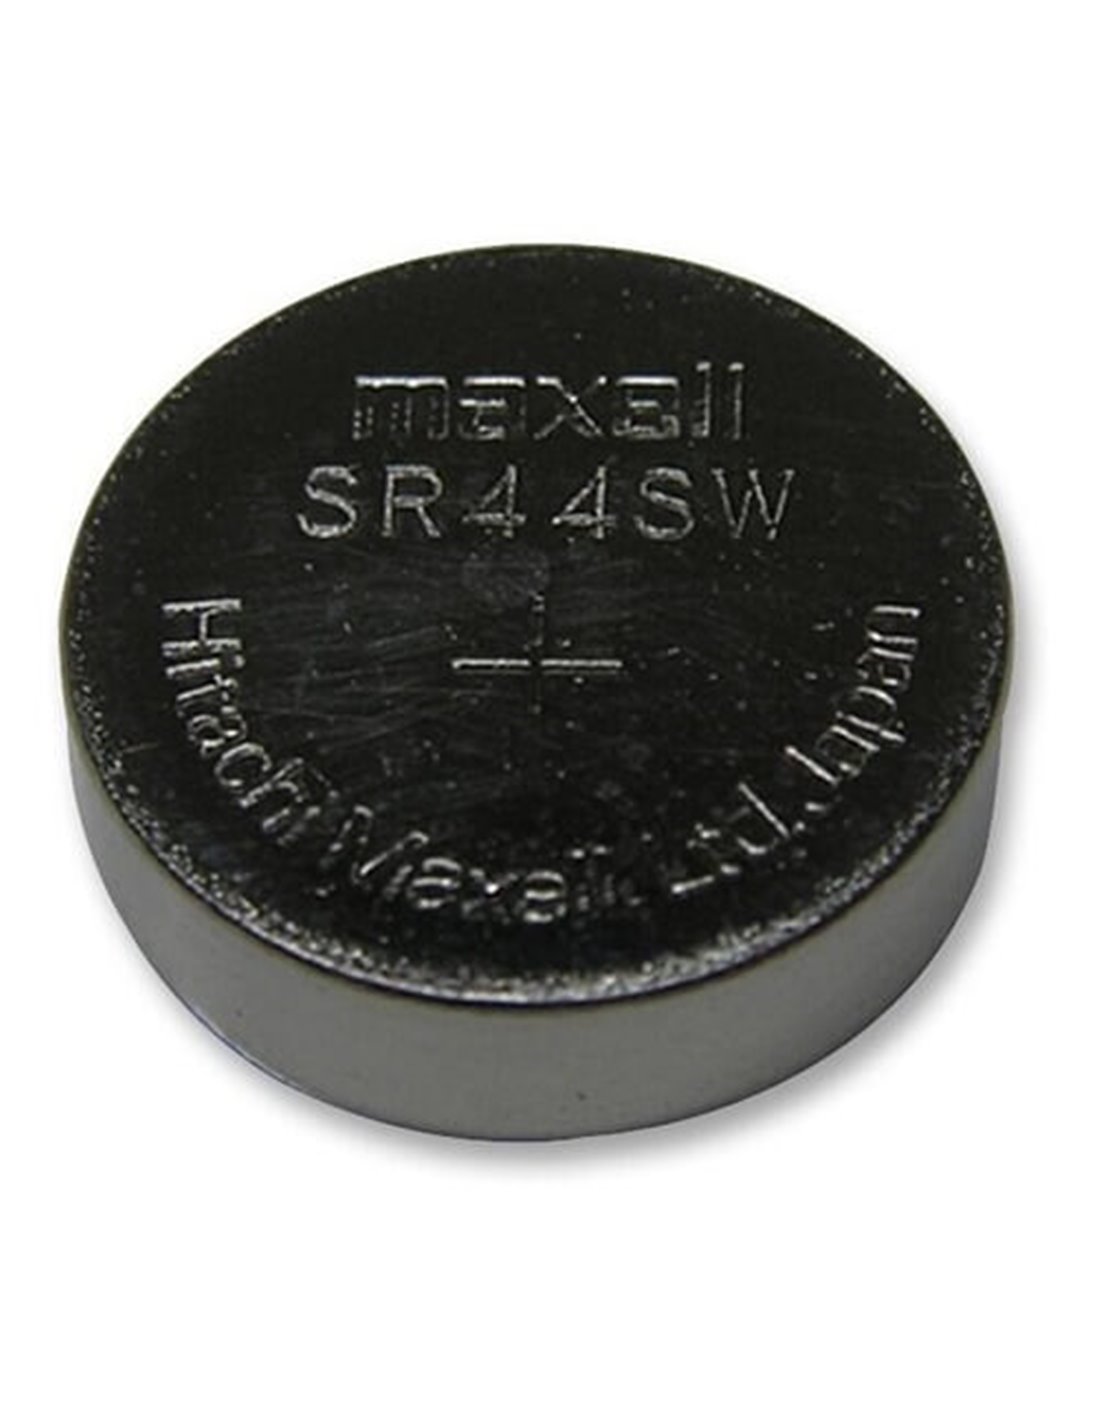 303 - SR44SW 1.55 Volt Silver Oxide Battery Replacement